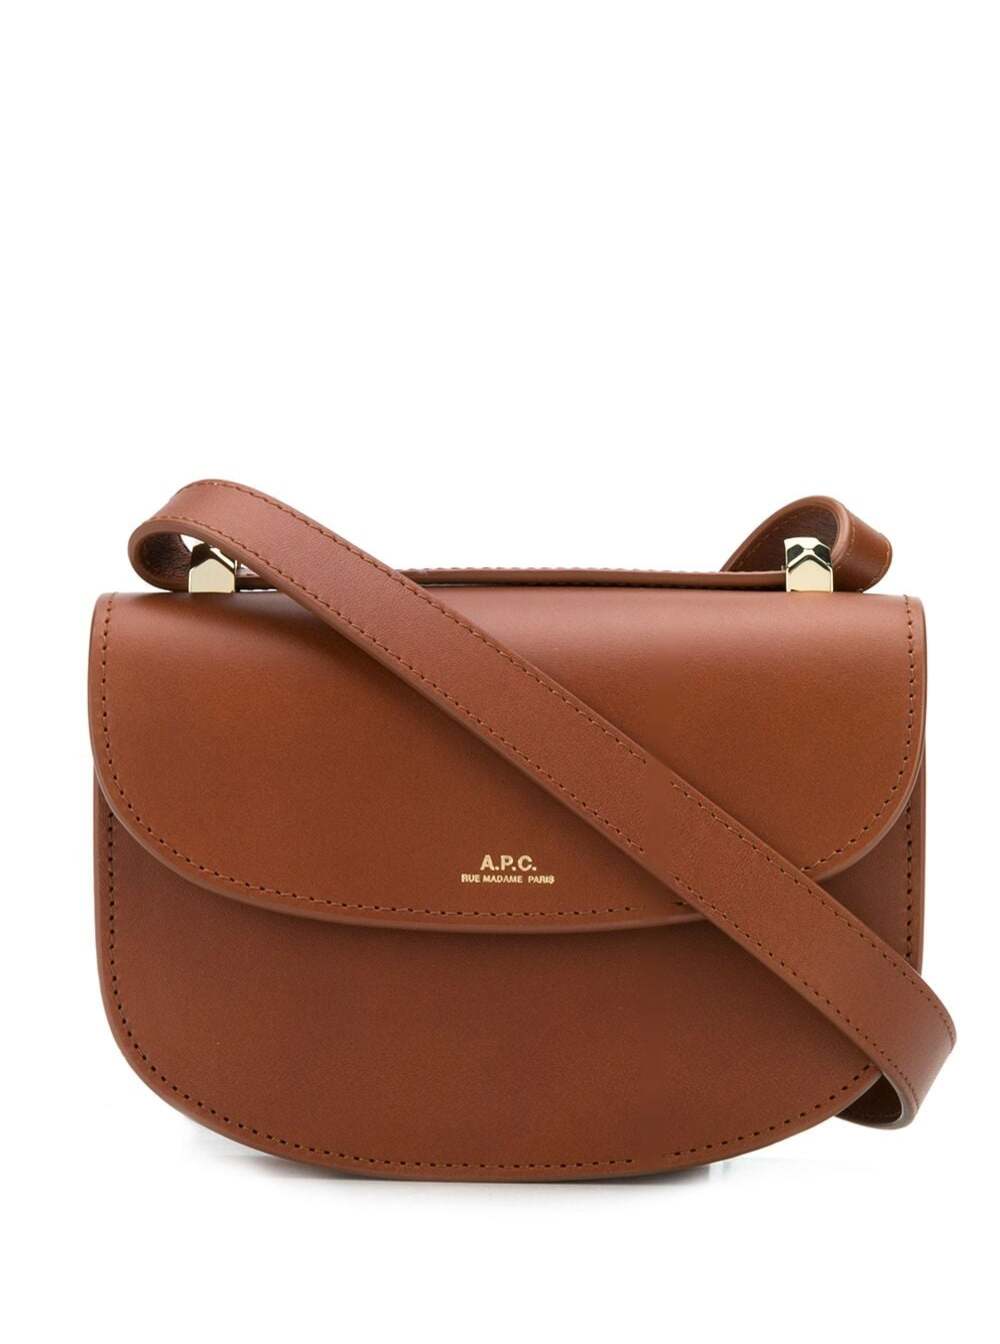 Apc Geneve Brown Shoulder Bag In Genuine Leather With Adjustable Shoulder Strap And Gold-colored Engrave